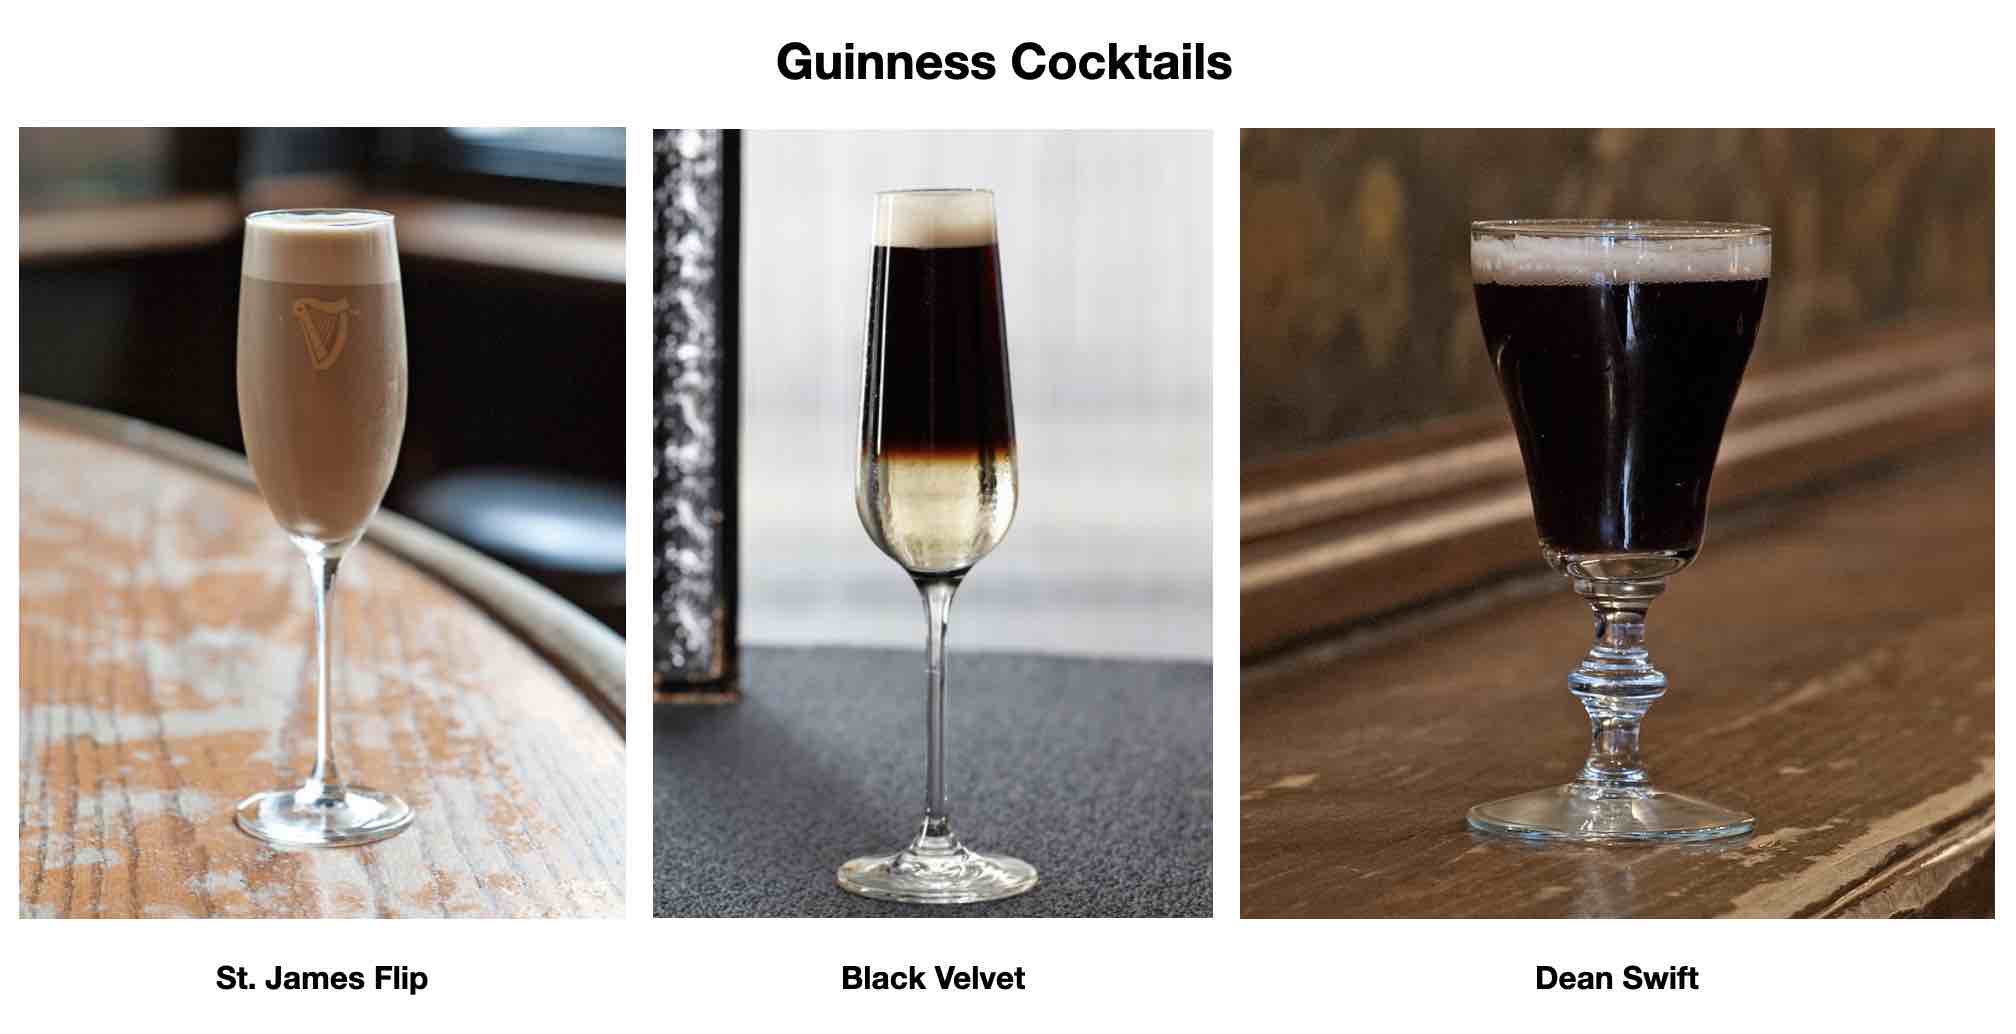 Guinness Stout Cocktails